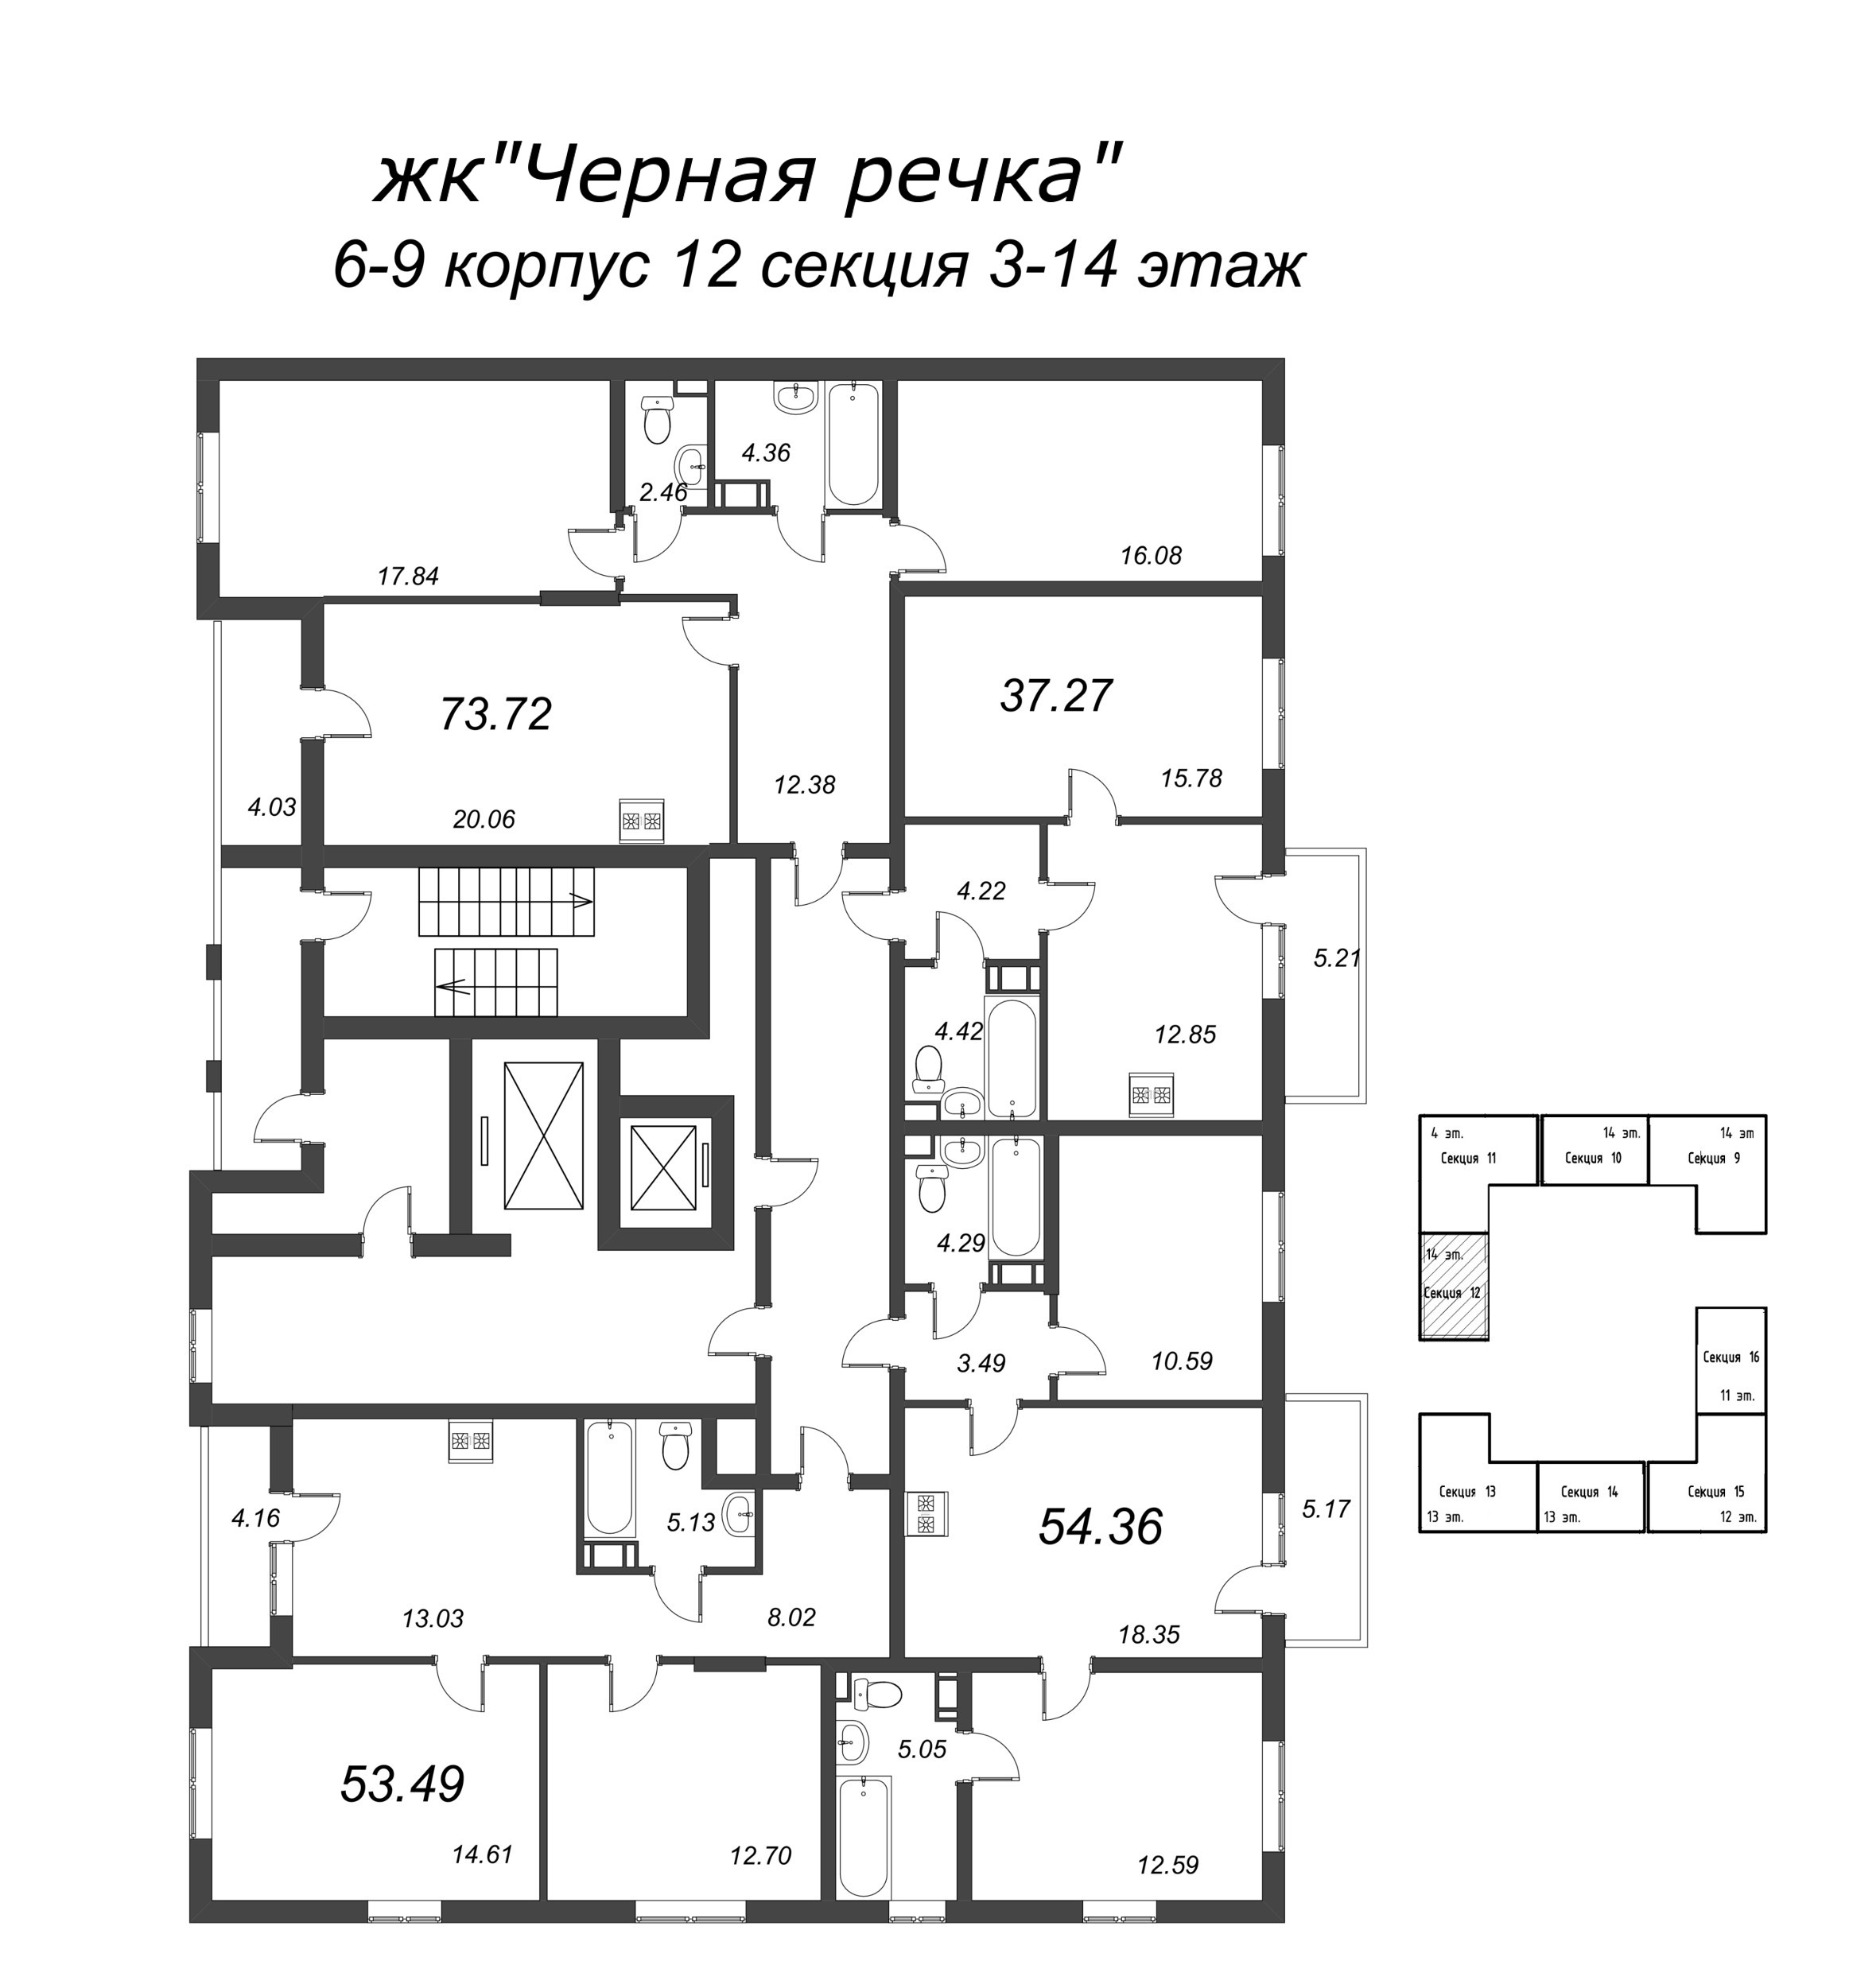 3-комнатная (Евро) квартира, 73.72 м² - планировка этажа